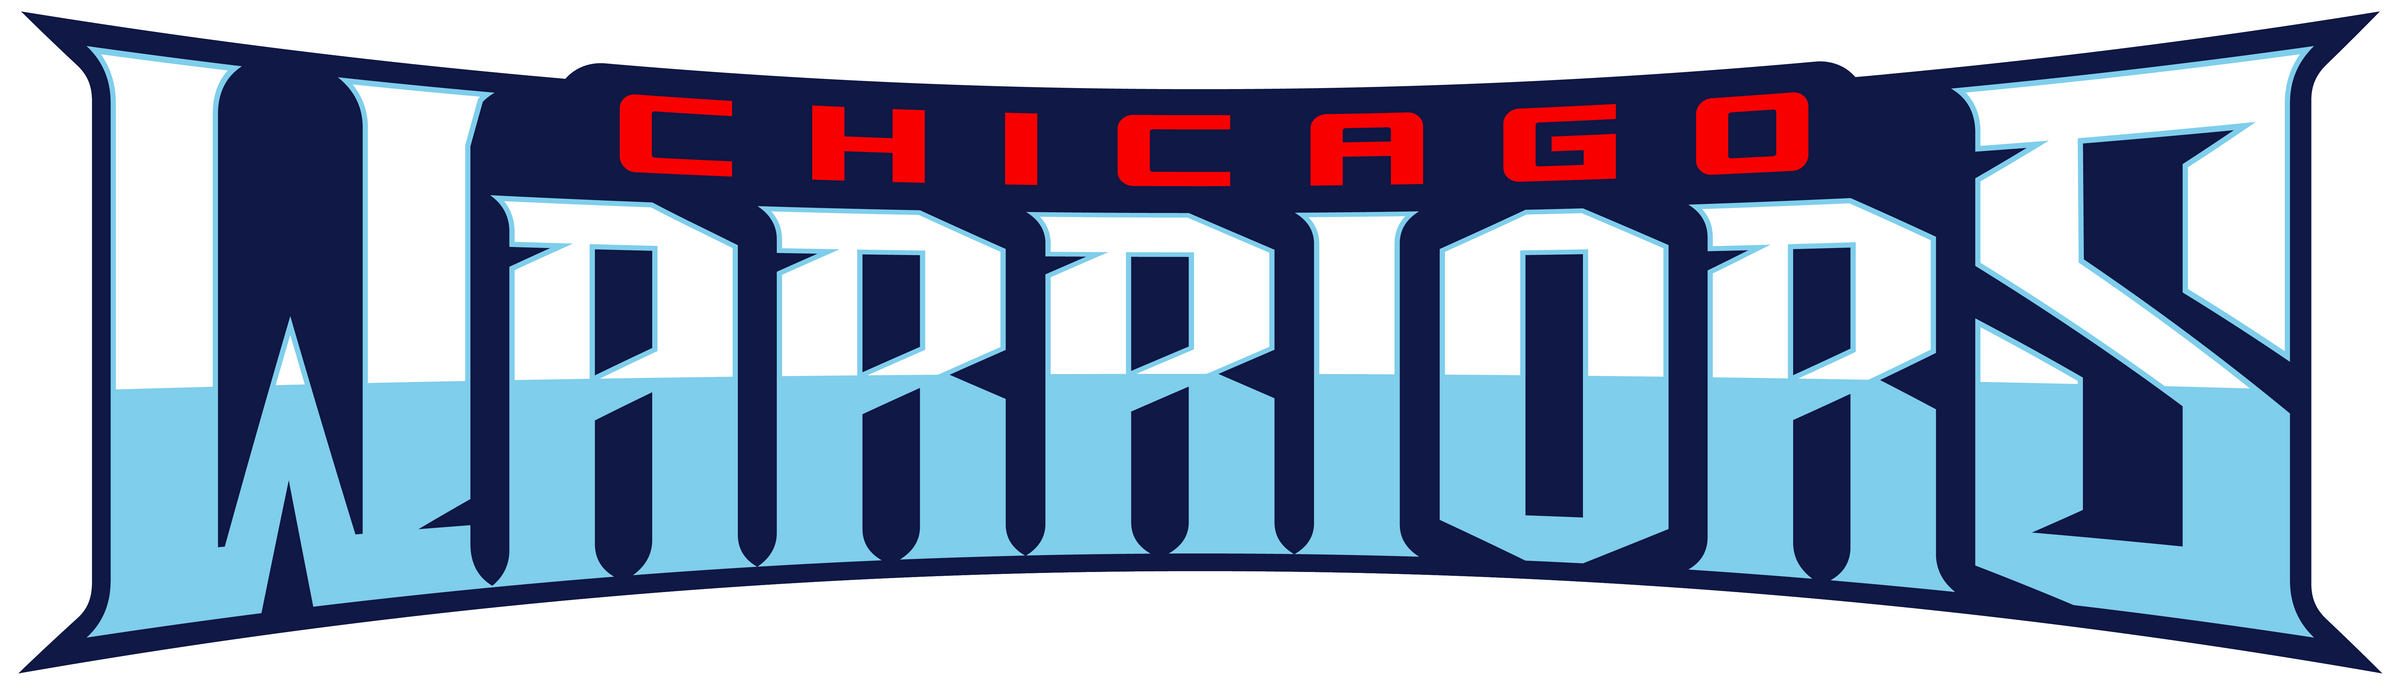 Chicago Warriors